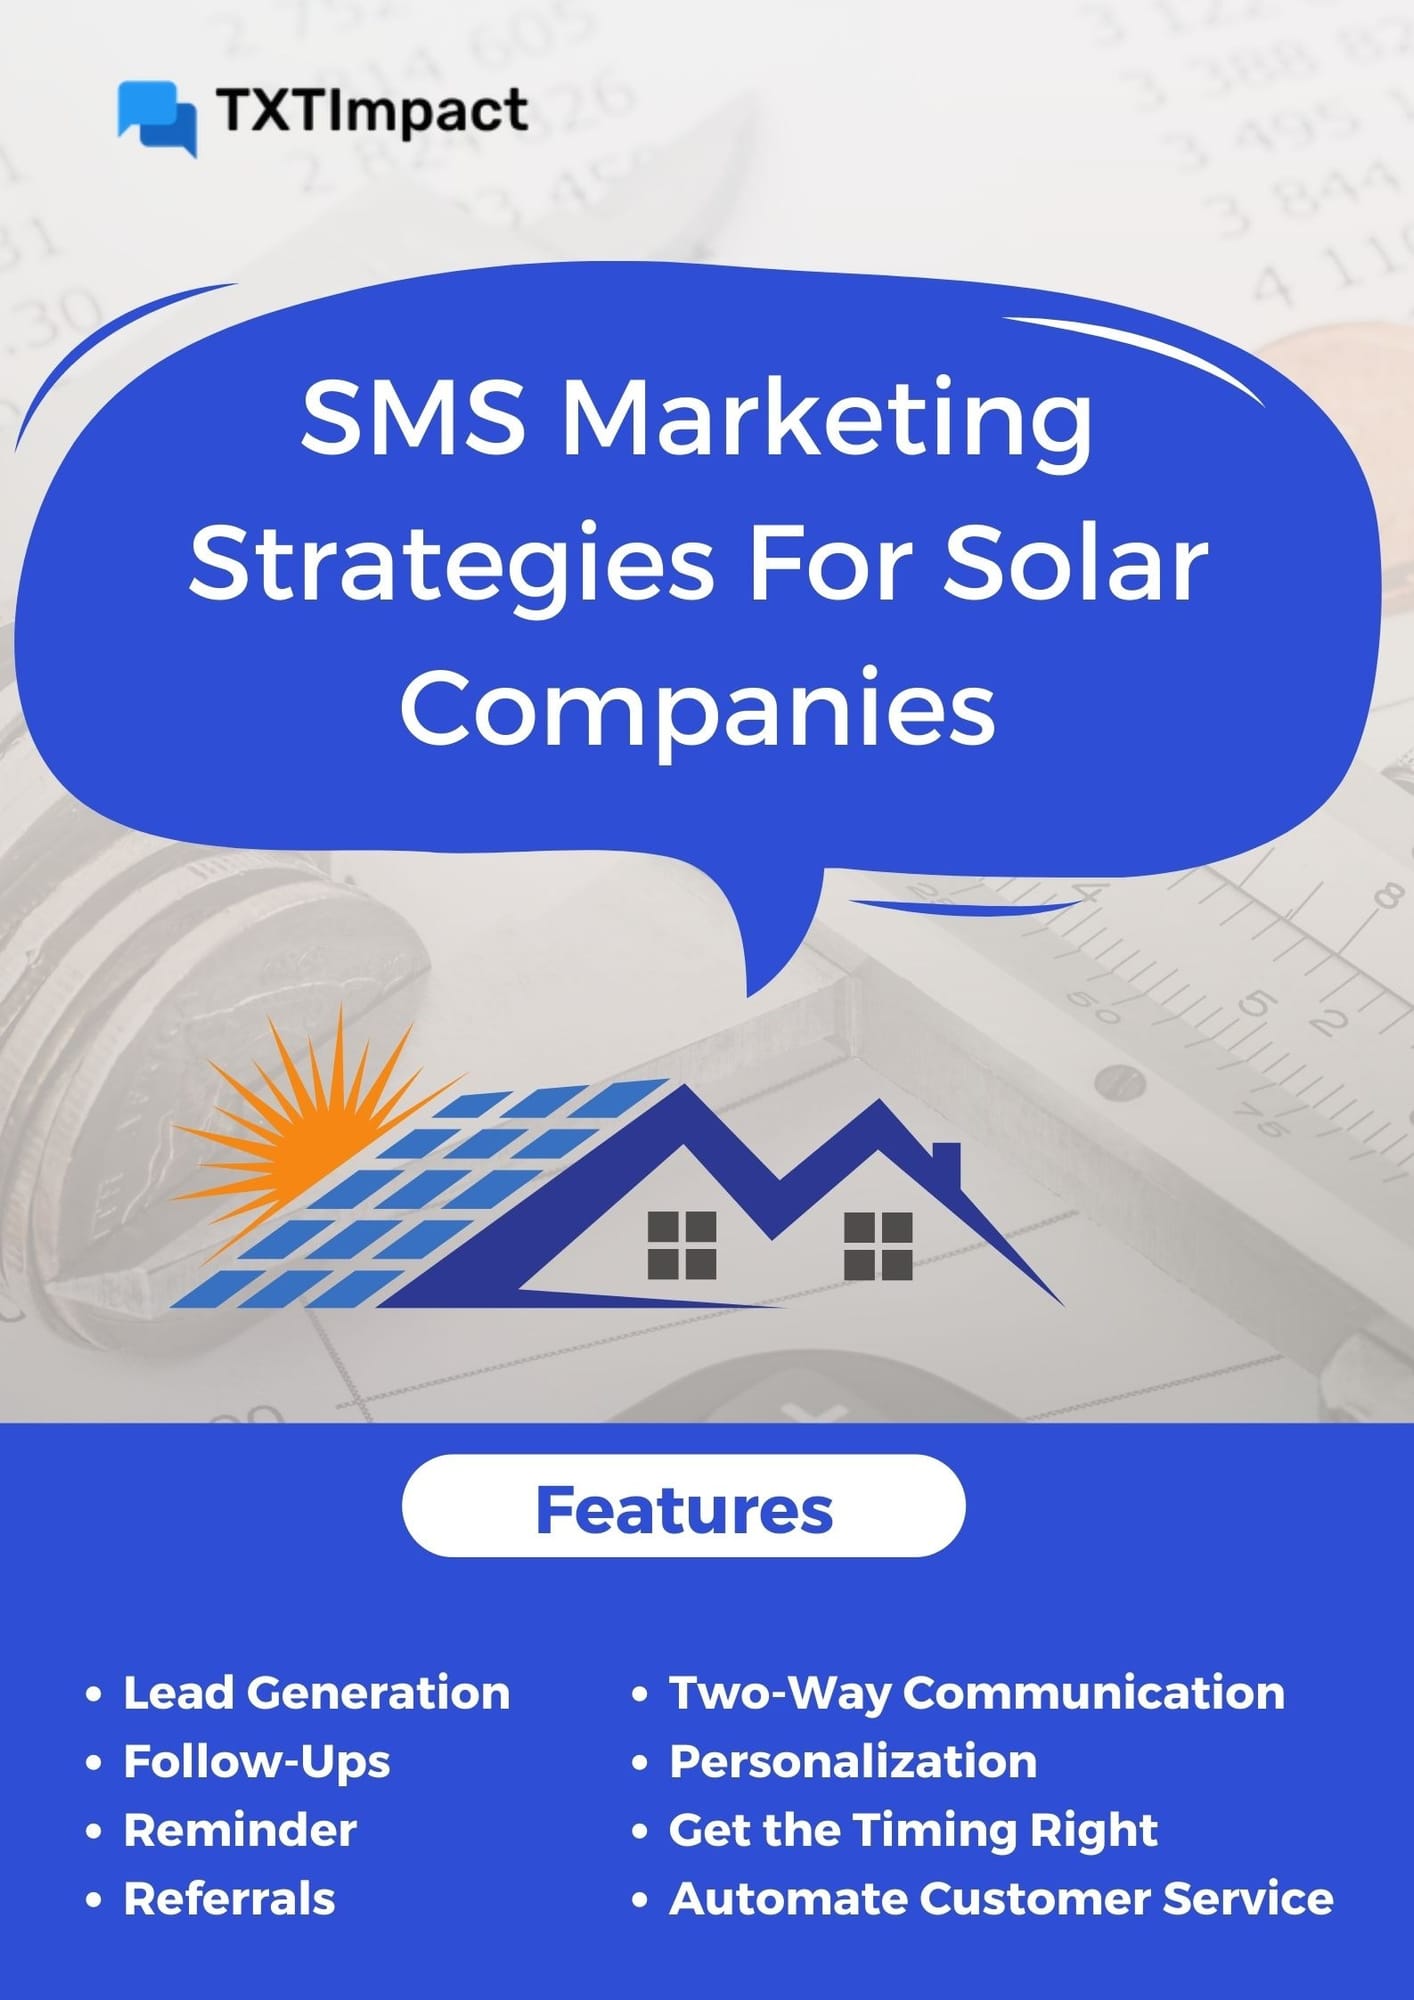 SMS Marketing Strategies for Solar Companies.jpg